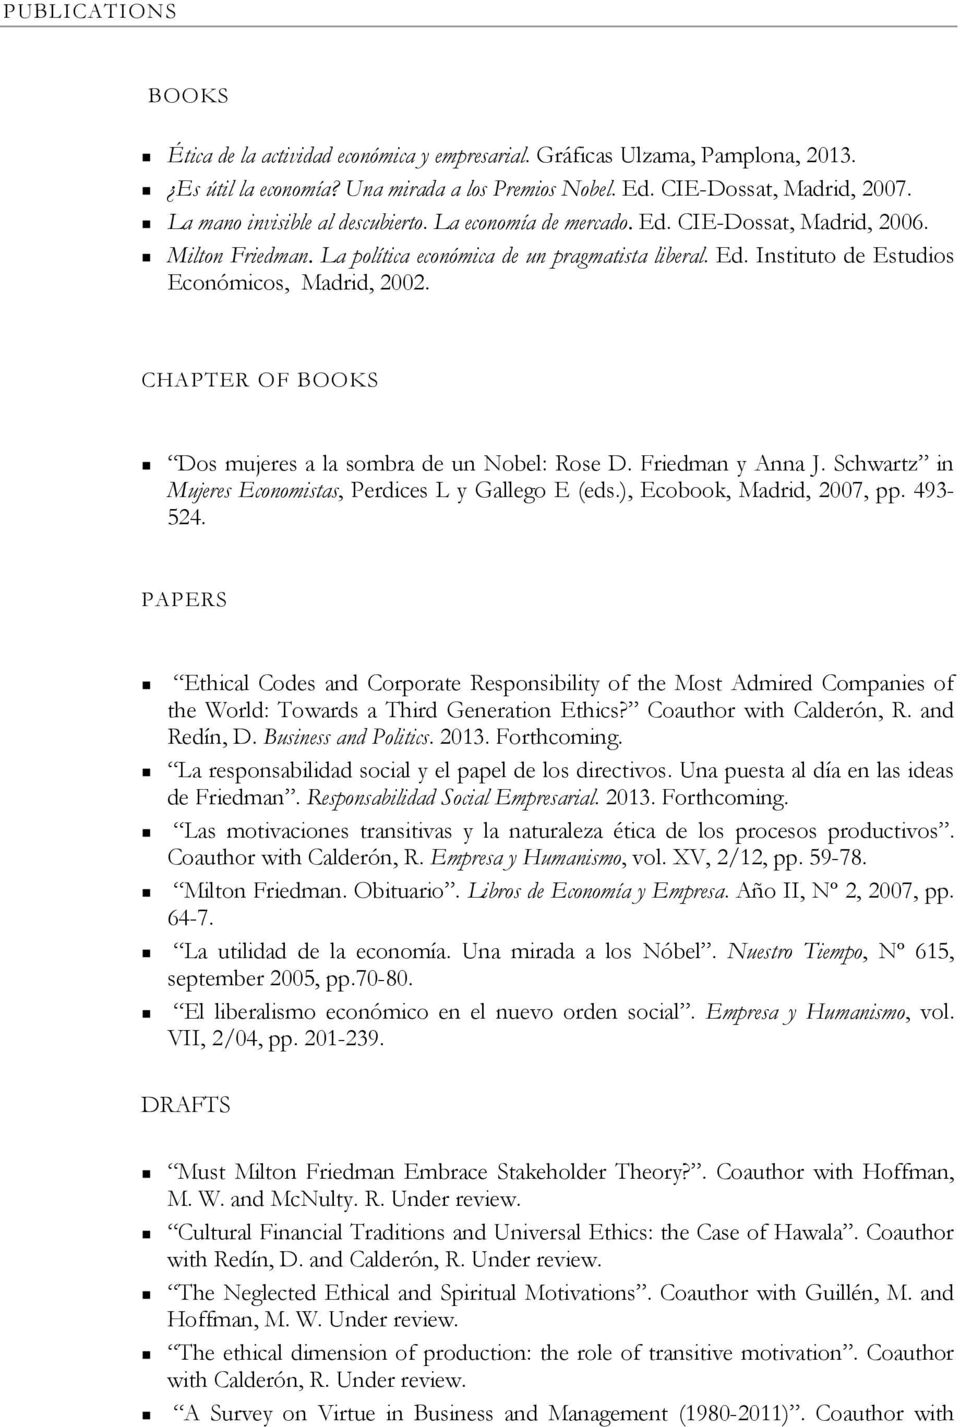 CHAPTER OF BOOKS Dos mujeres a la sombra de un Nobel: Rose D. Friedman y Anna J. Schwartz in Mujeres Economistas, Perdices L y Gallego E (eds.), Ecobook, Madrid, 2007, pp. 493-524.